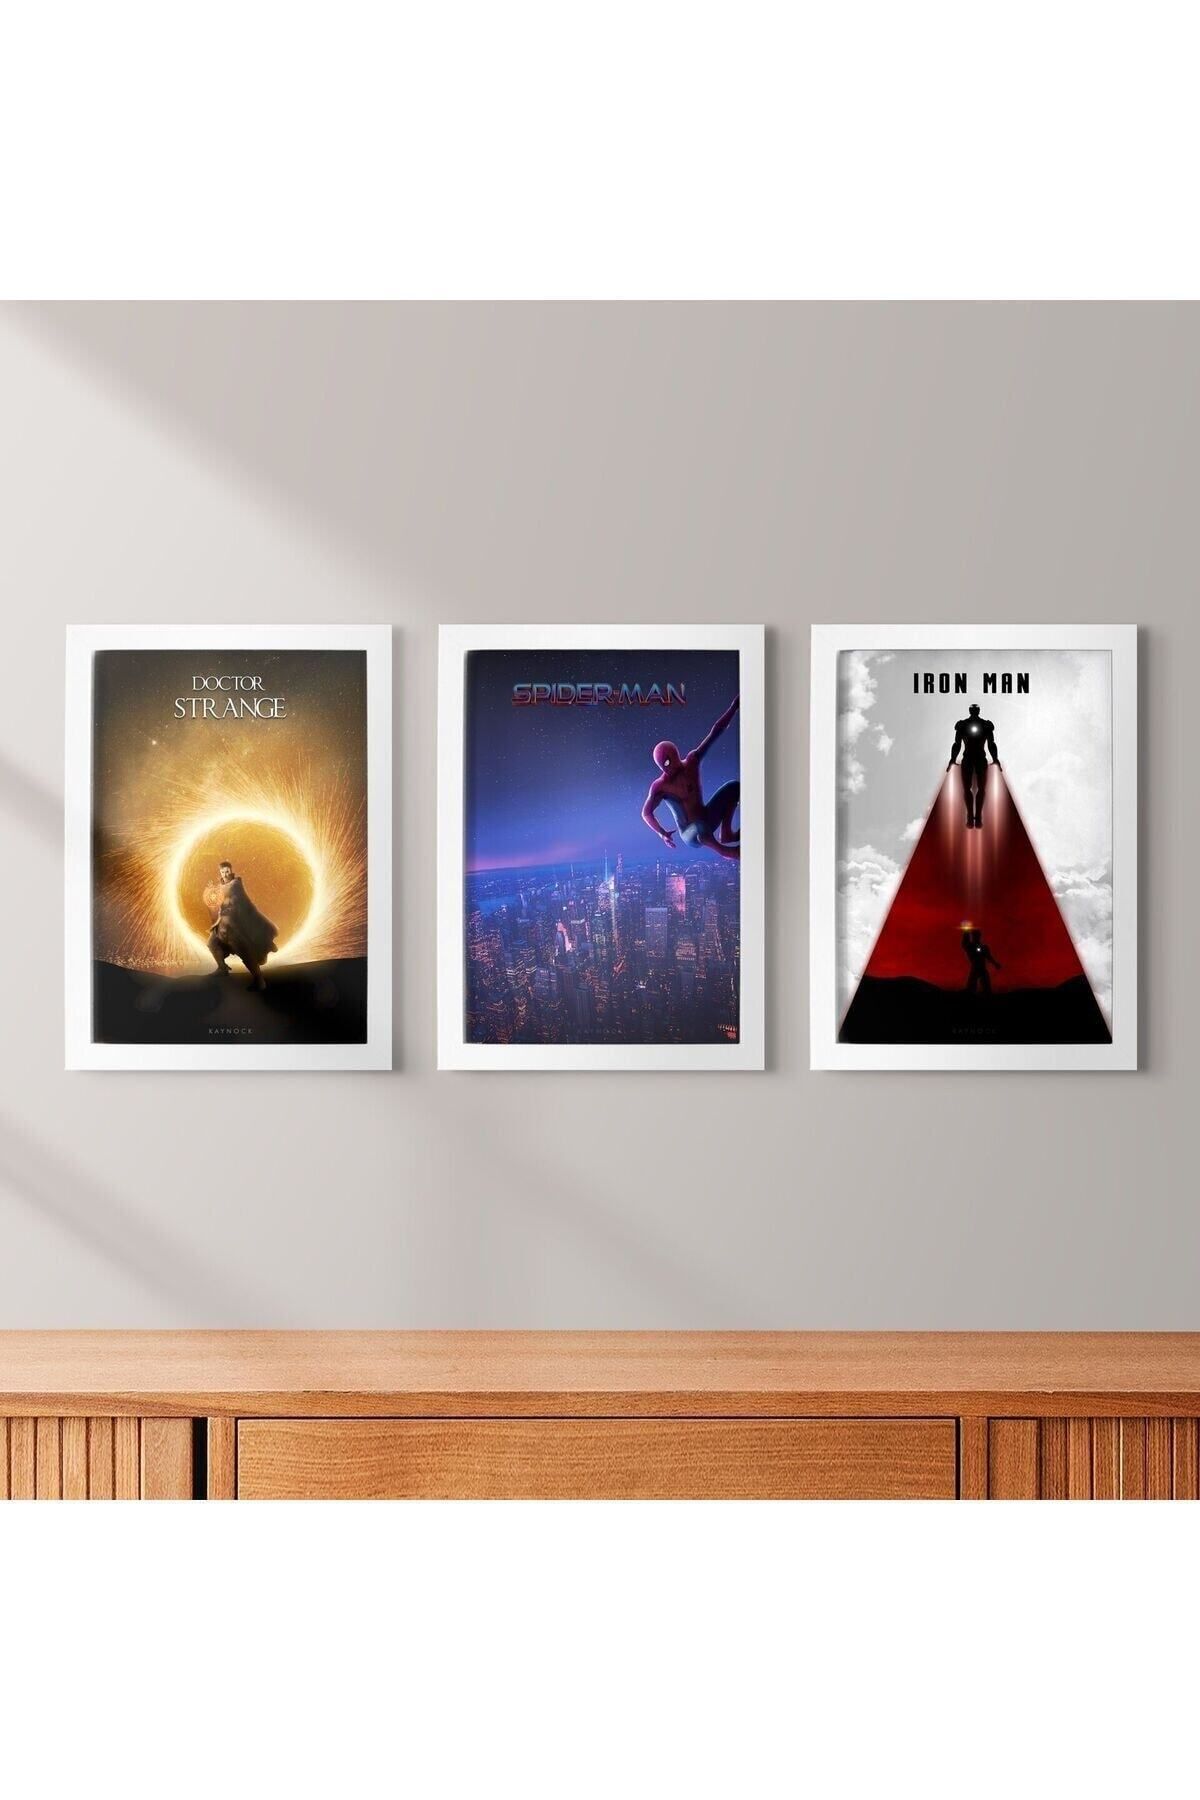 KAYNOCK Süper Kahraman 3'lü Set, Spiderman, Iron Man, Tablo Seti, Poster Tablo Dijital Tasarım